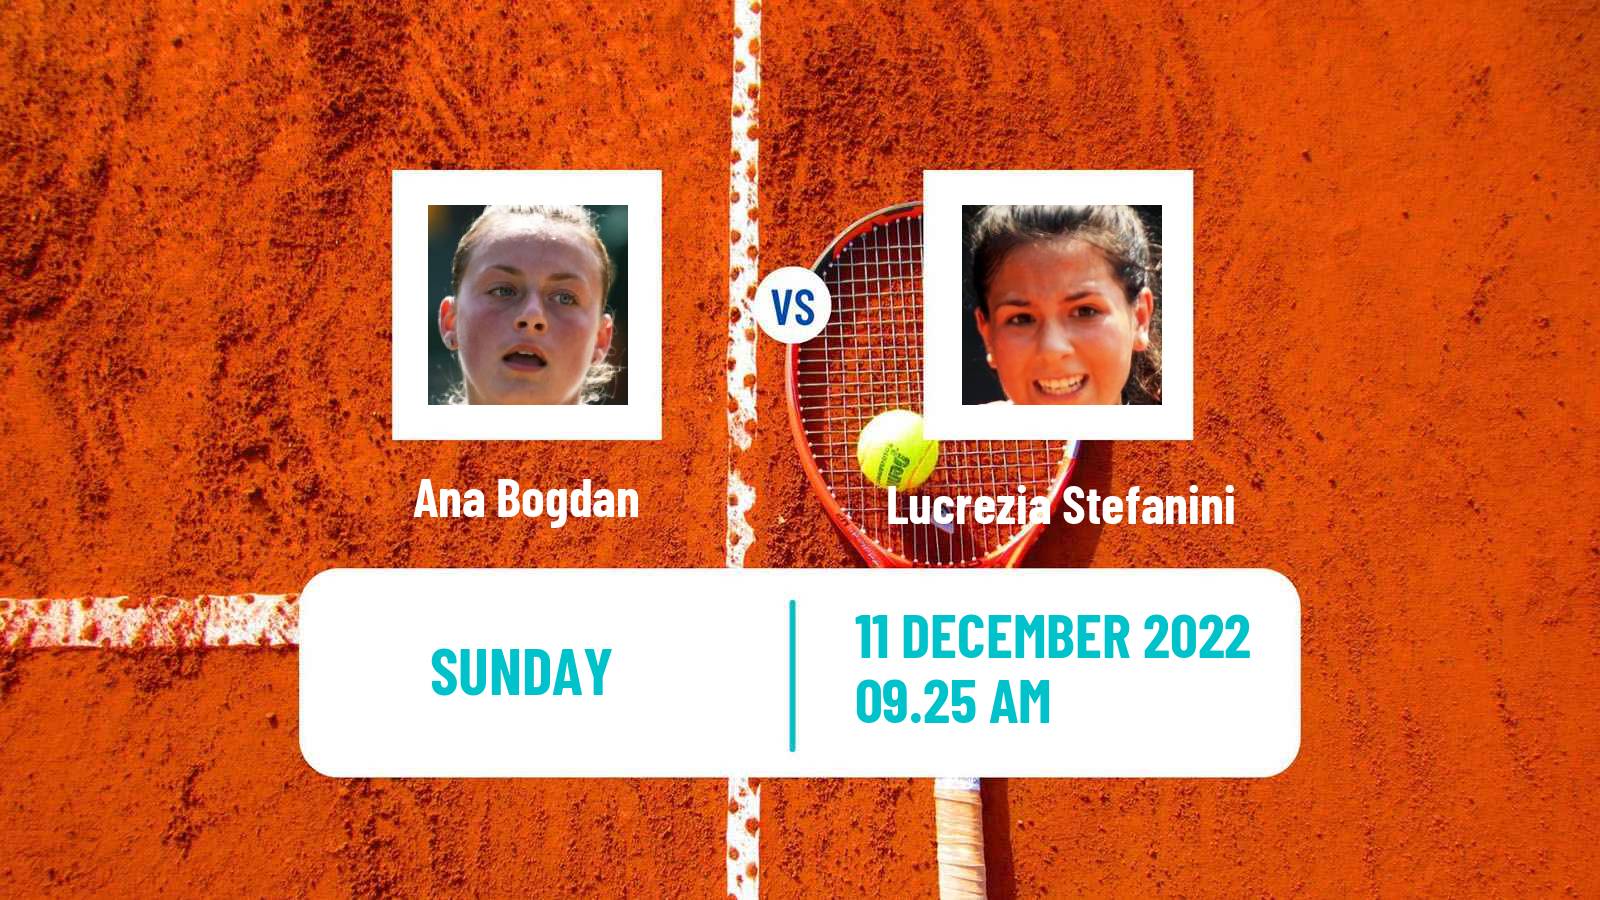 Tennis ATP Challenger Ana Bogdan - Lucrezia Stefanini